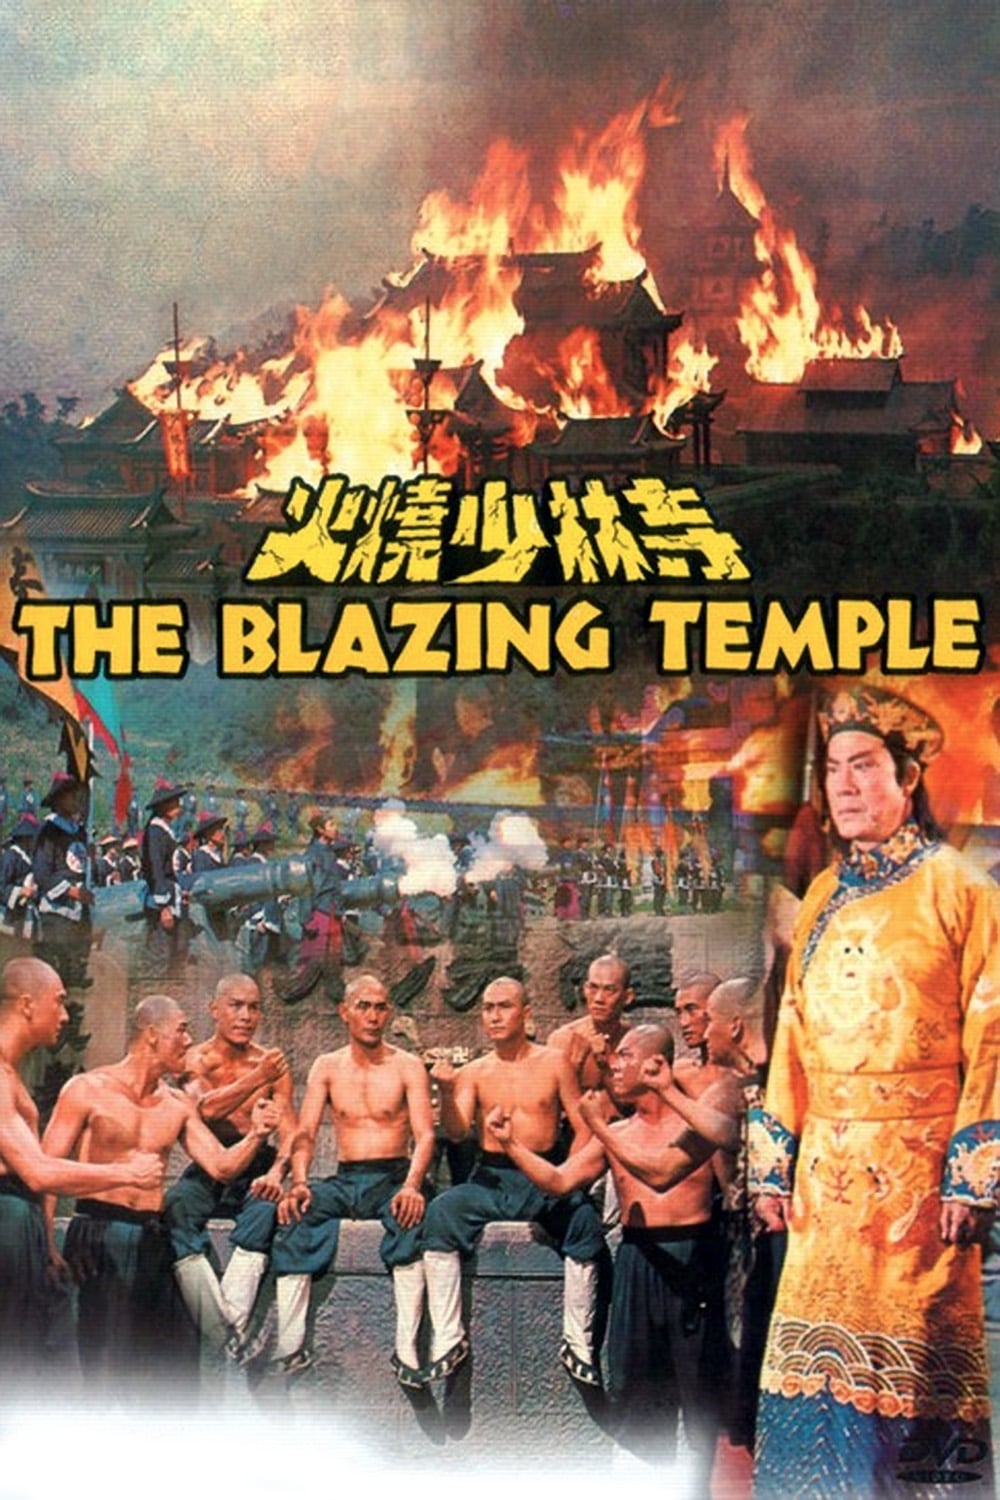 The Blazing Temple (1976)